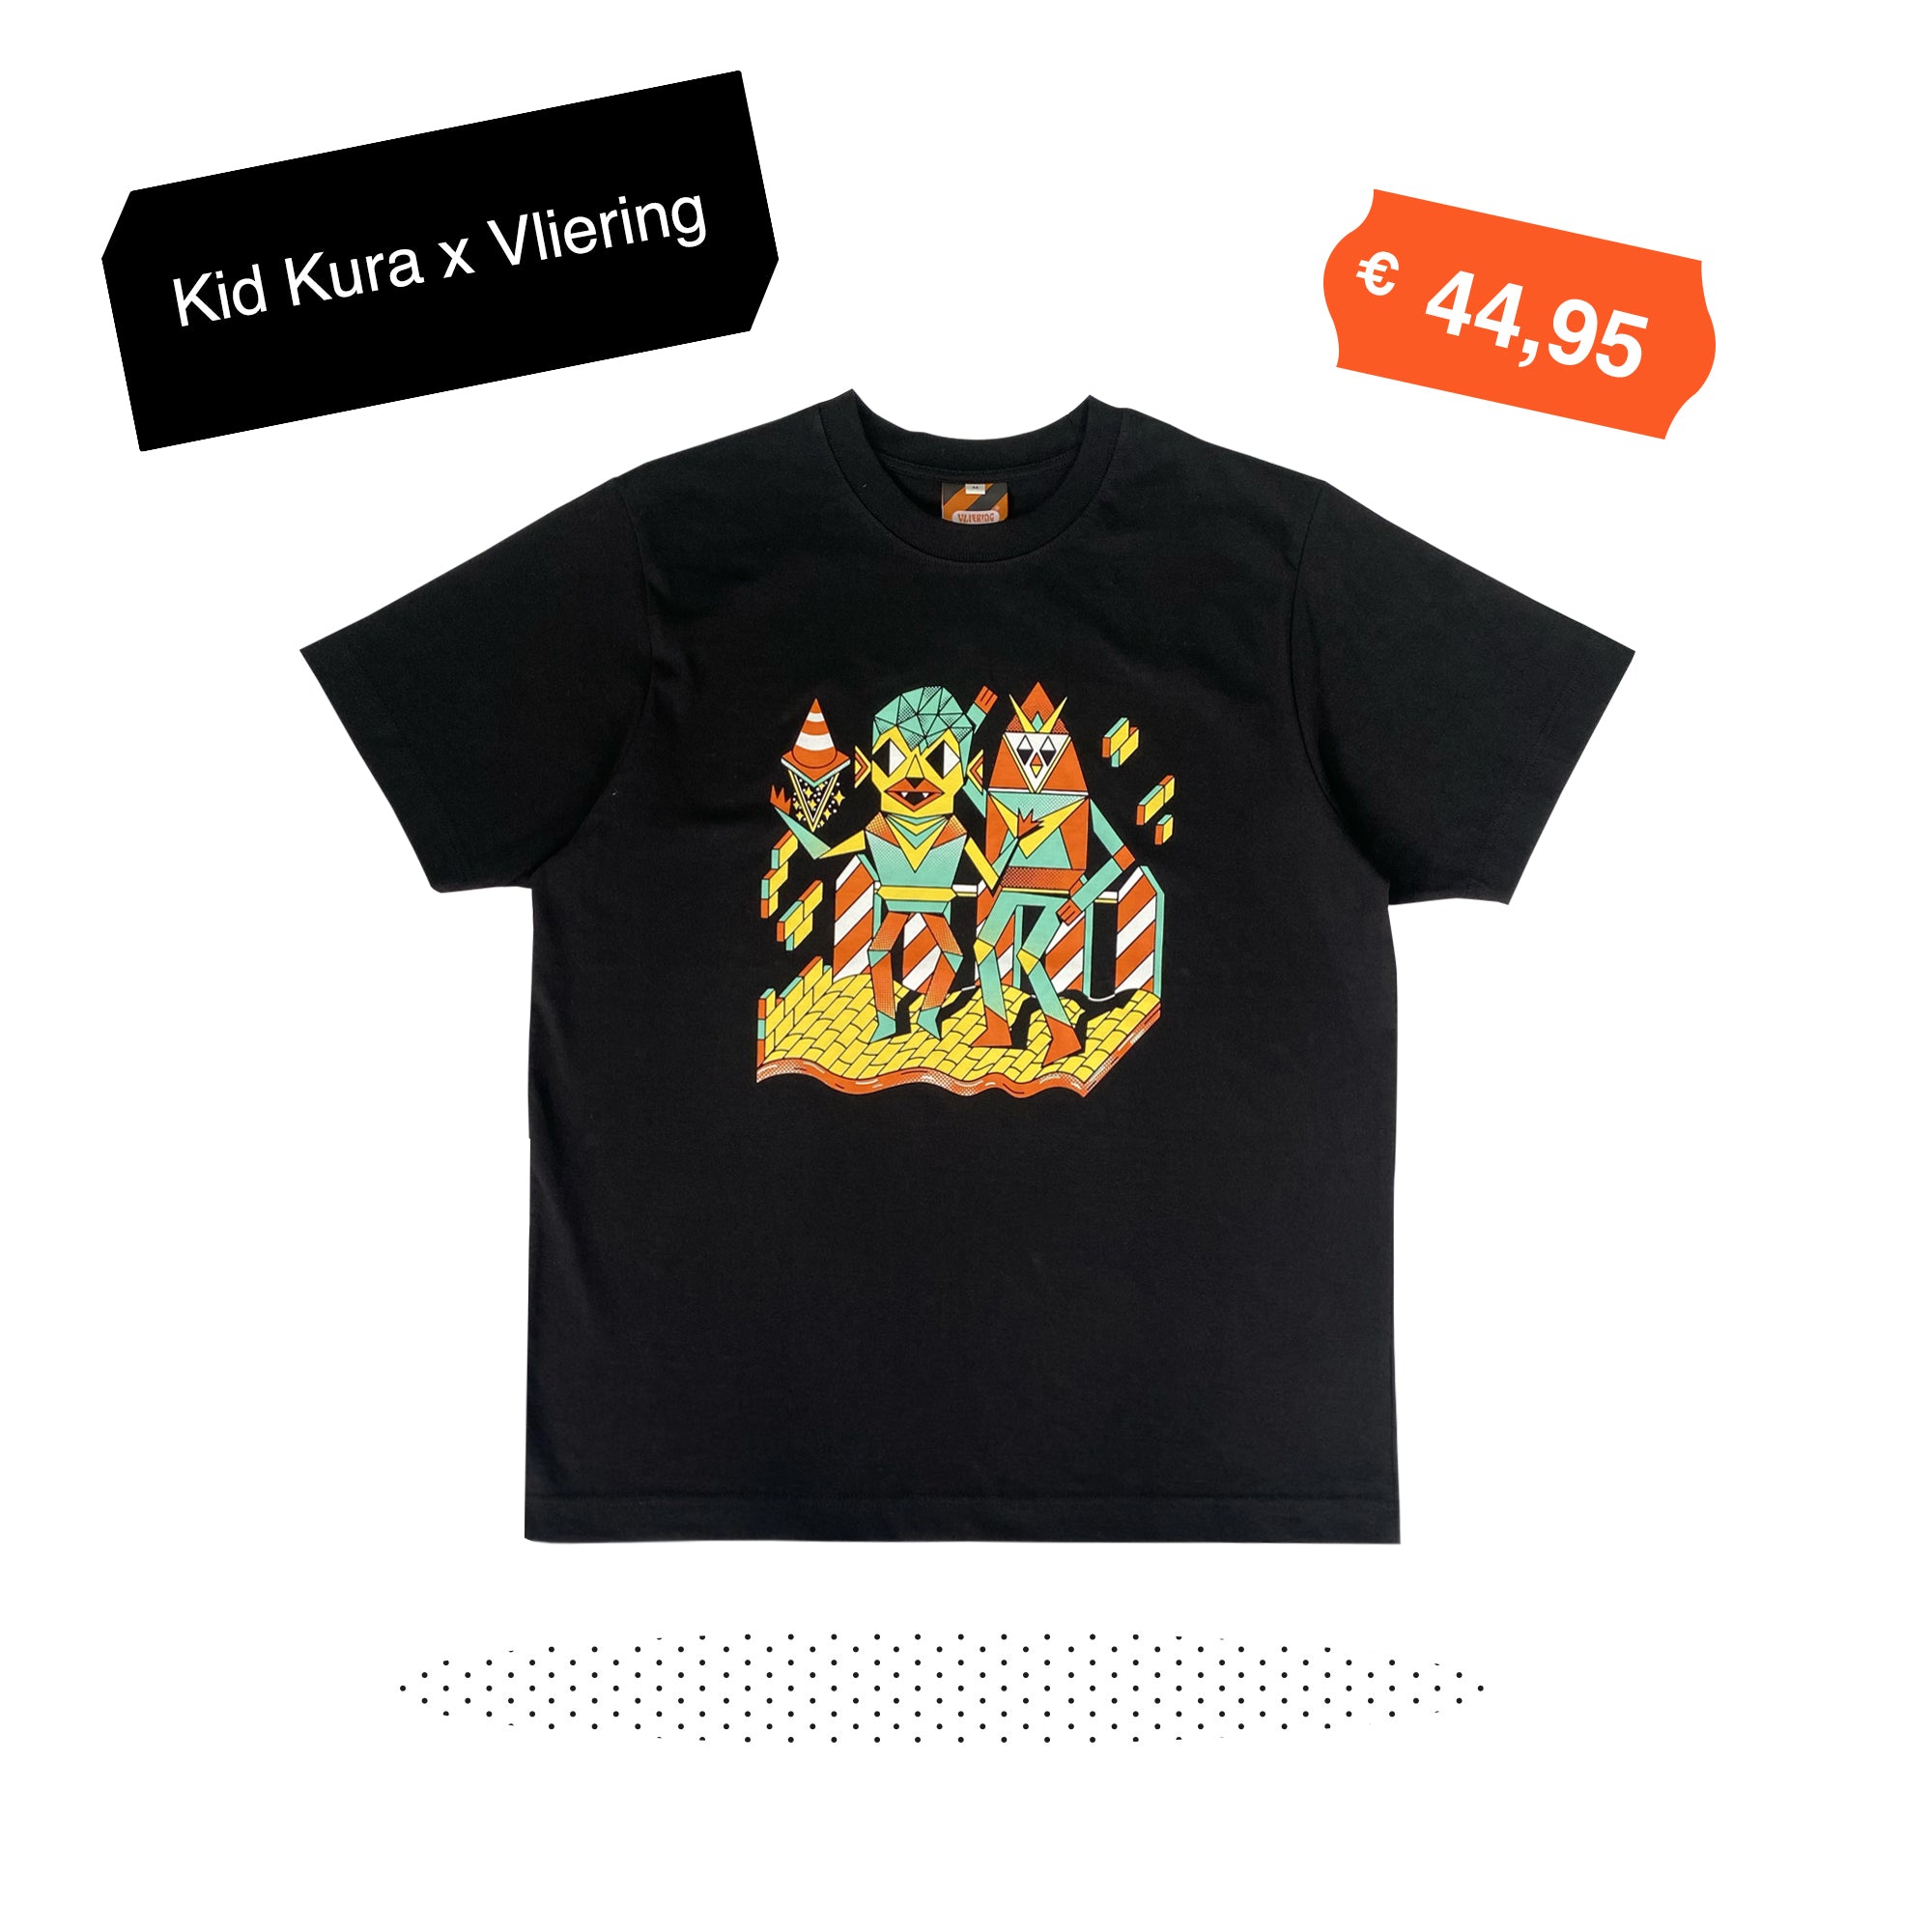 Kid Kura x Vliering T-Shirt